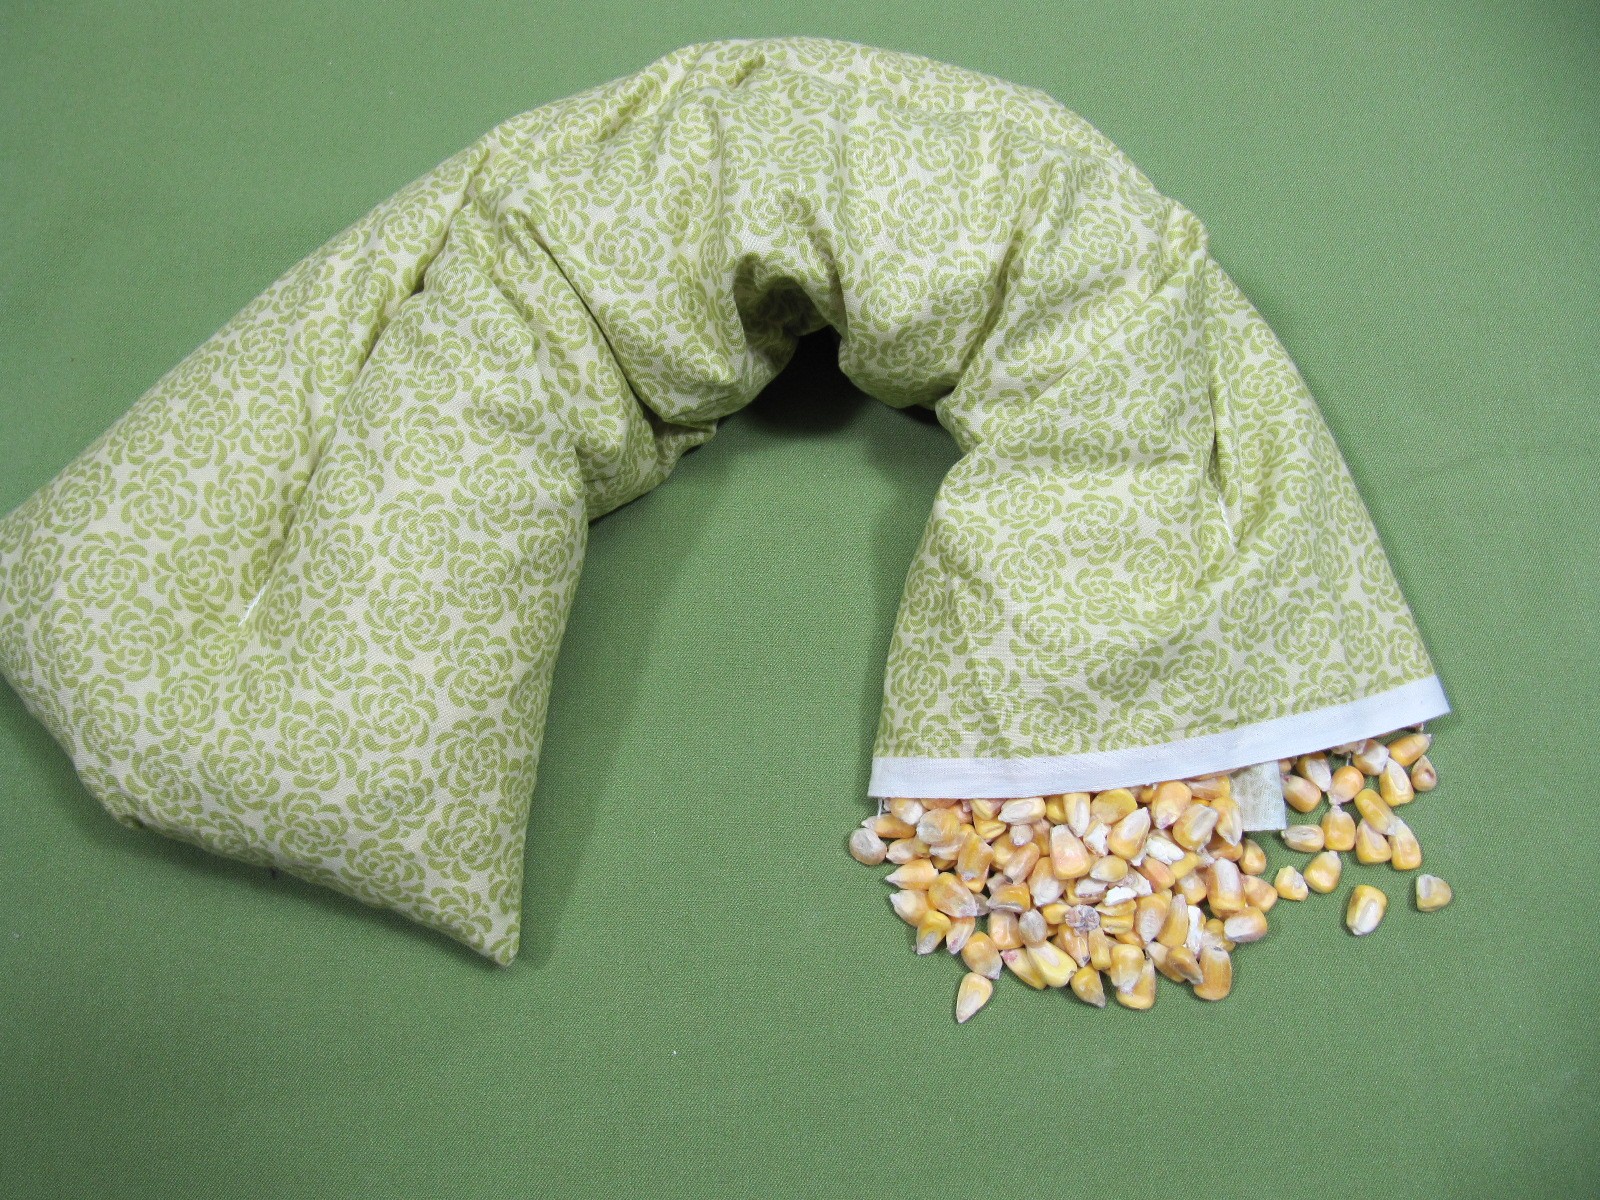 Corn Bags Heating Pads how to do it yourself – The Idea Door